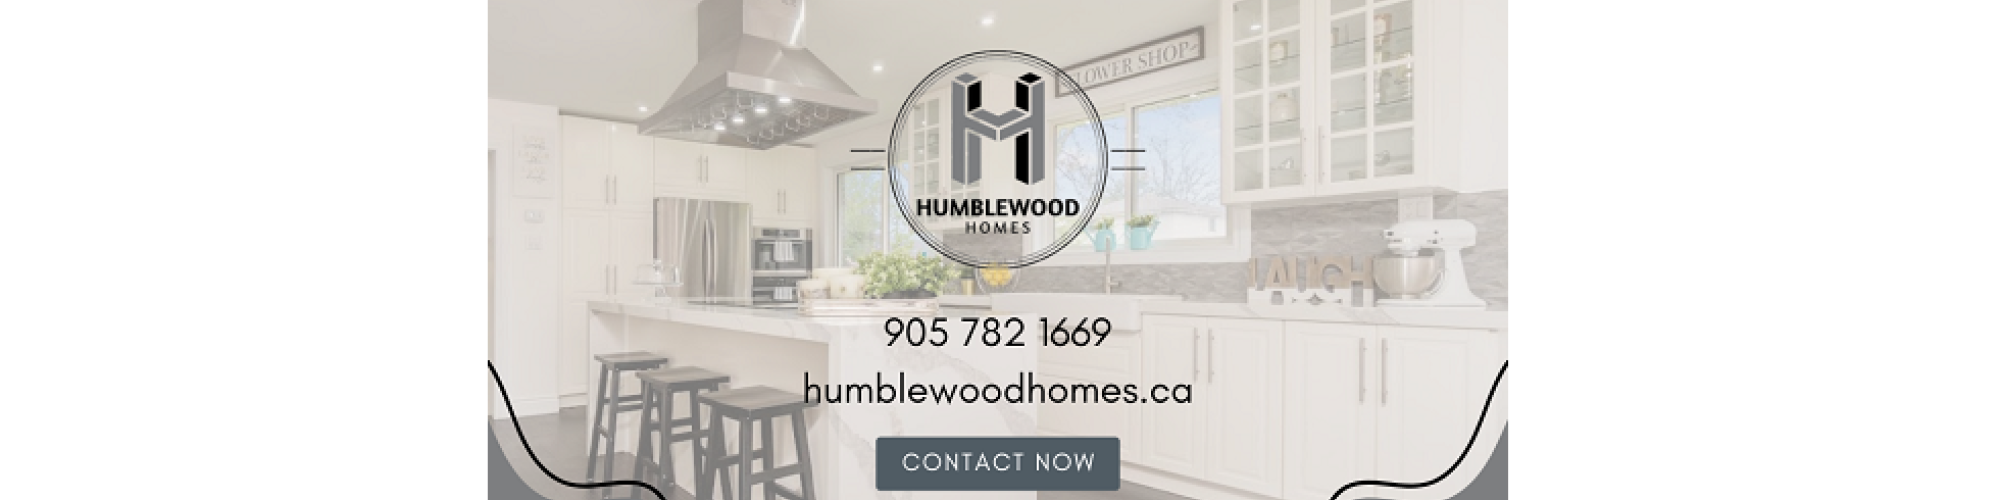 Humblewood Homes